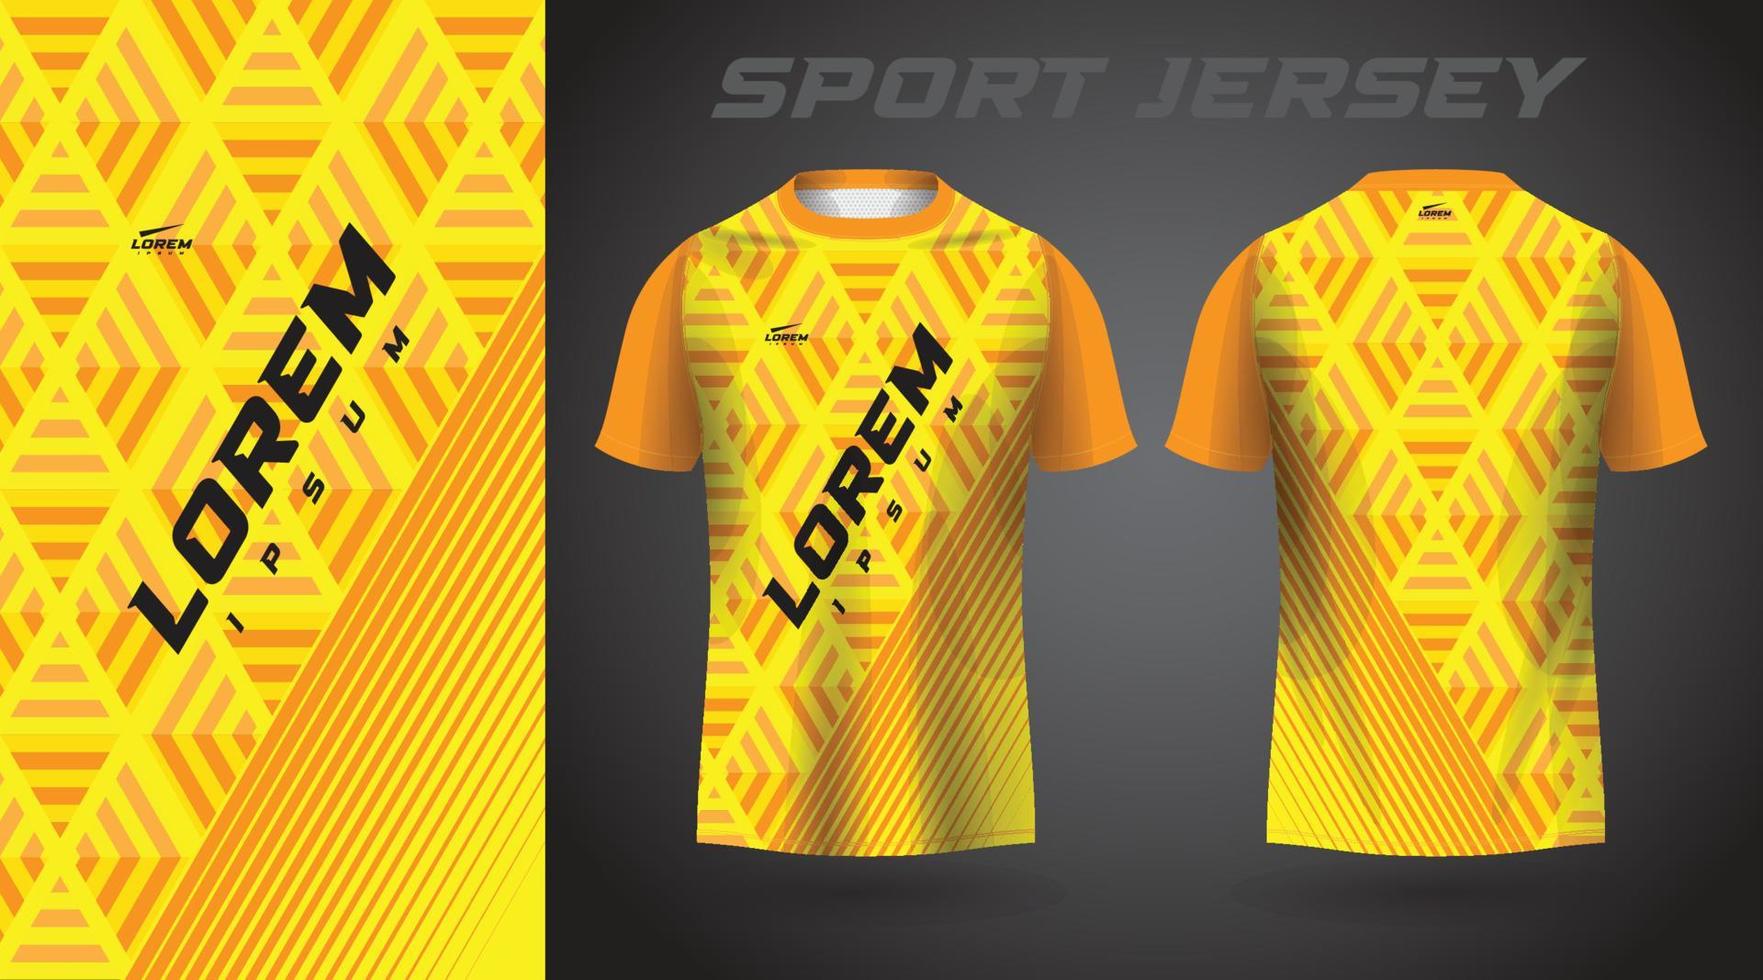 diseño de camiseta deportiva de camiseta amarilla vector